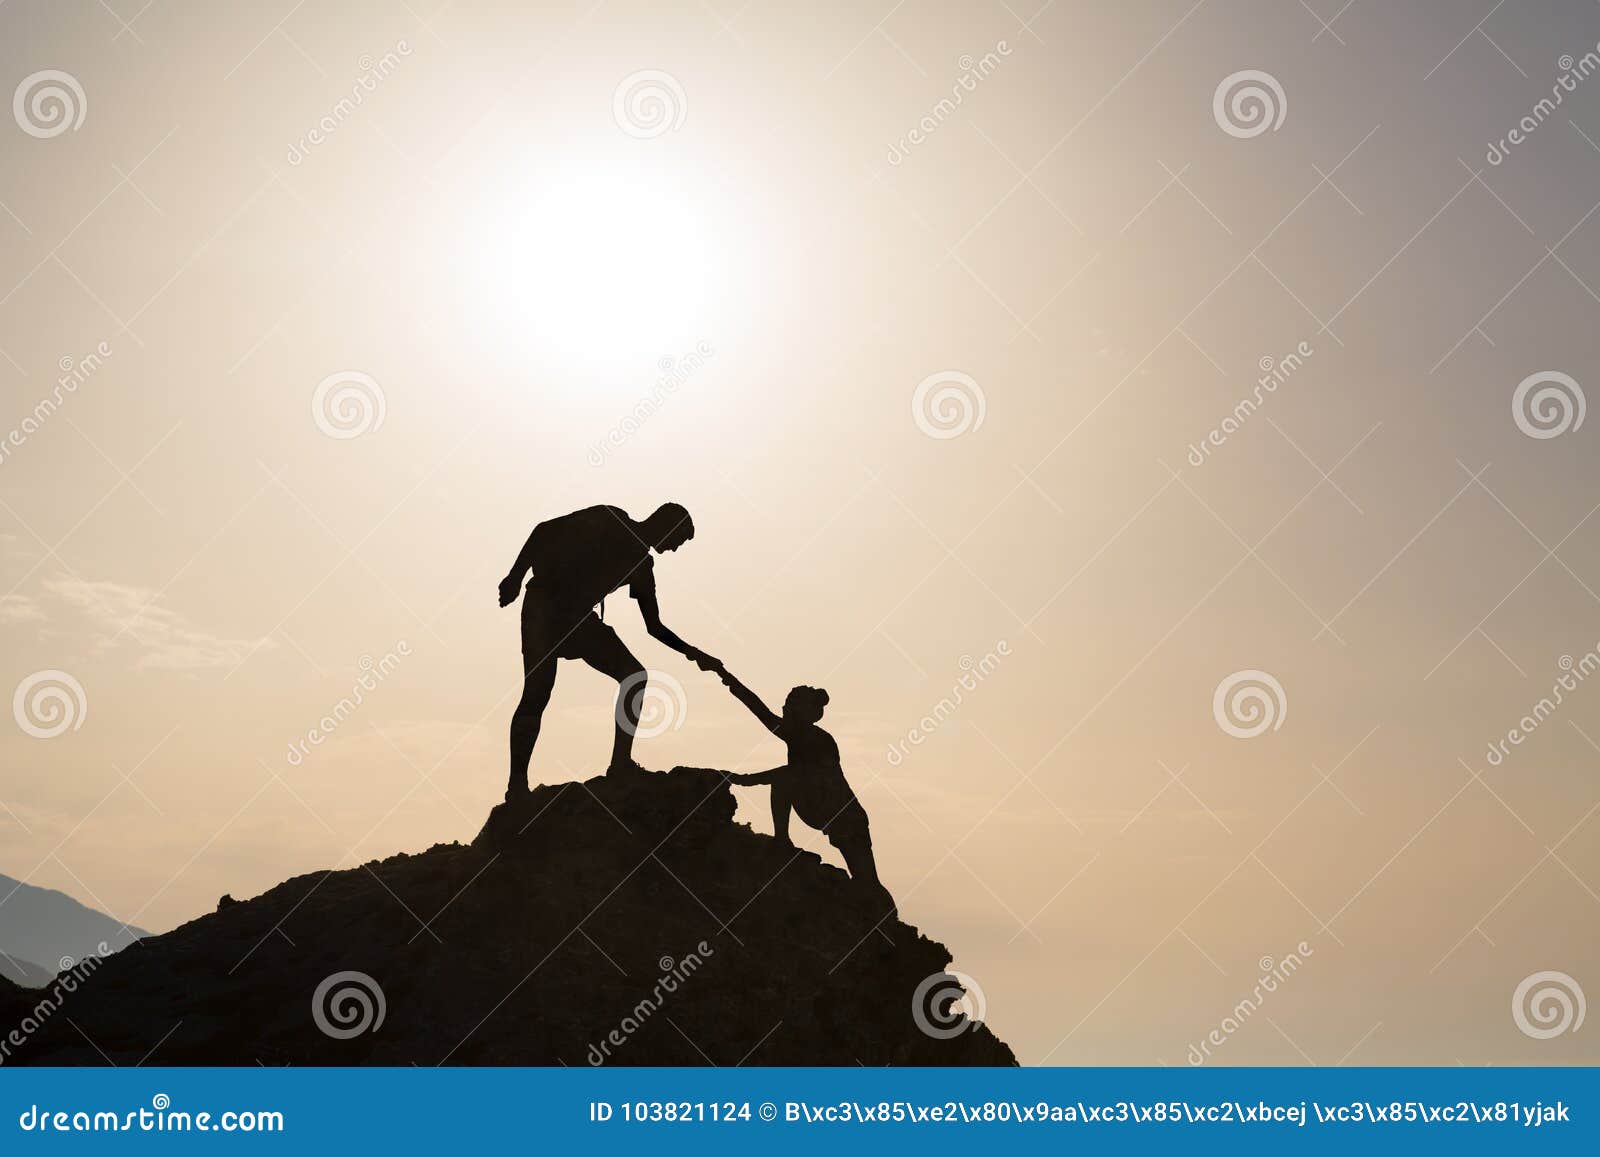 teamwork couple helping hand trust in inspiring mountains